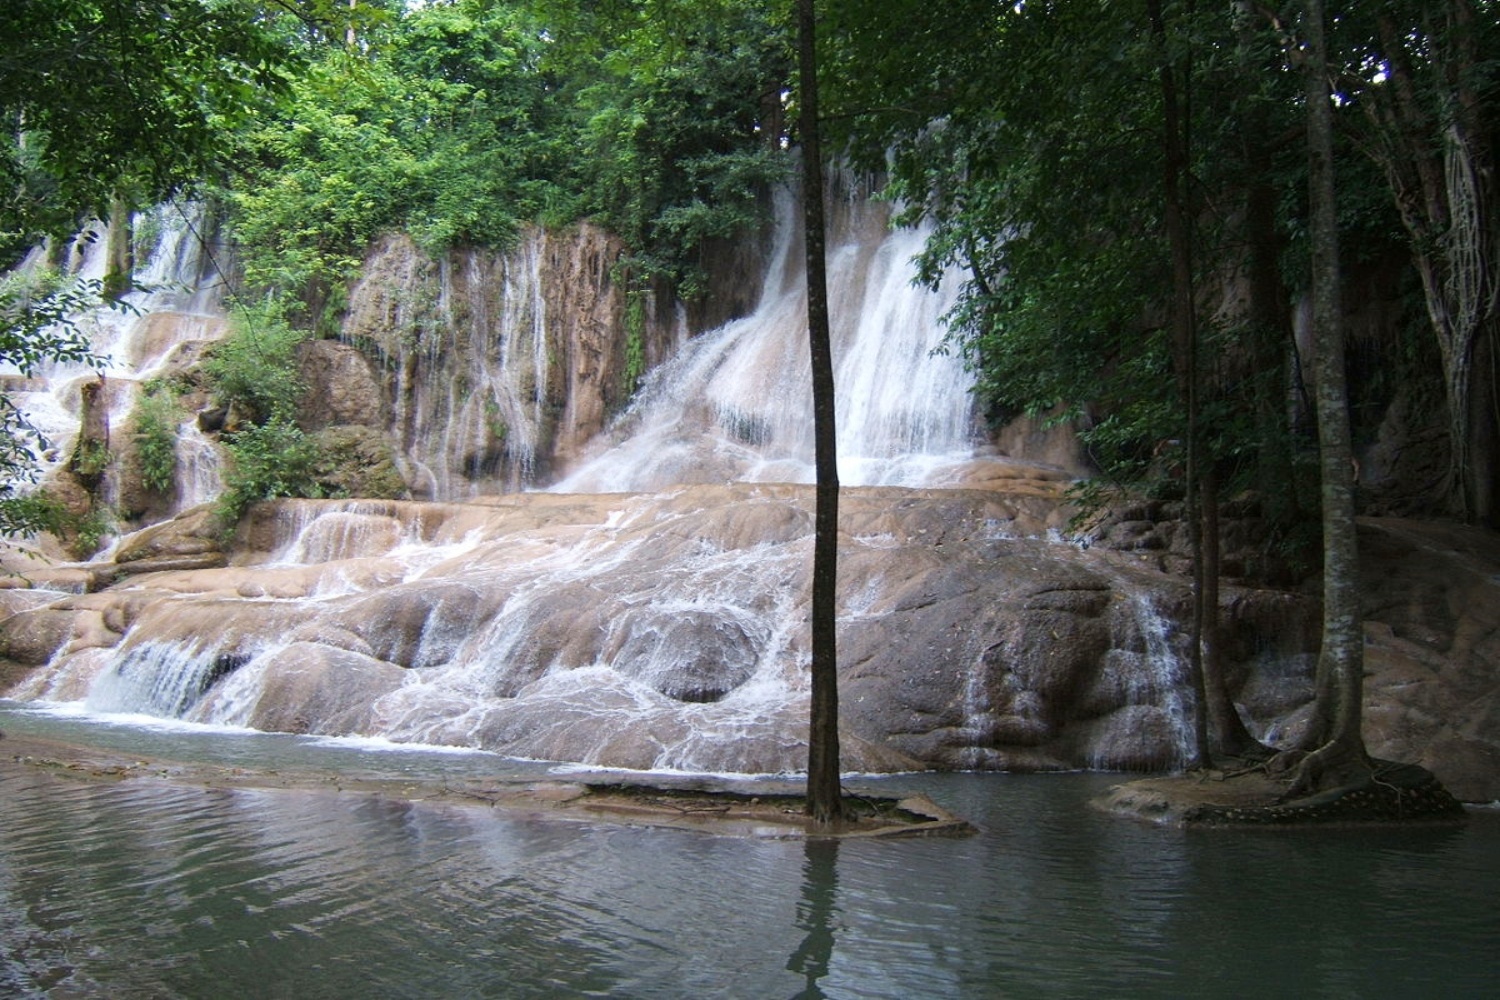 Sai Yok Noi waterfall